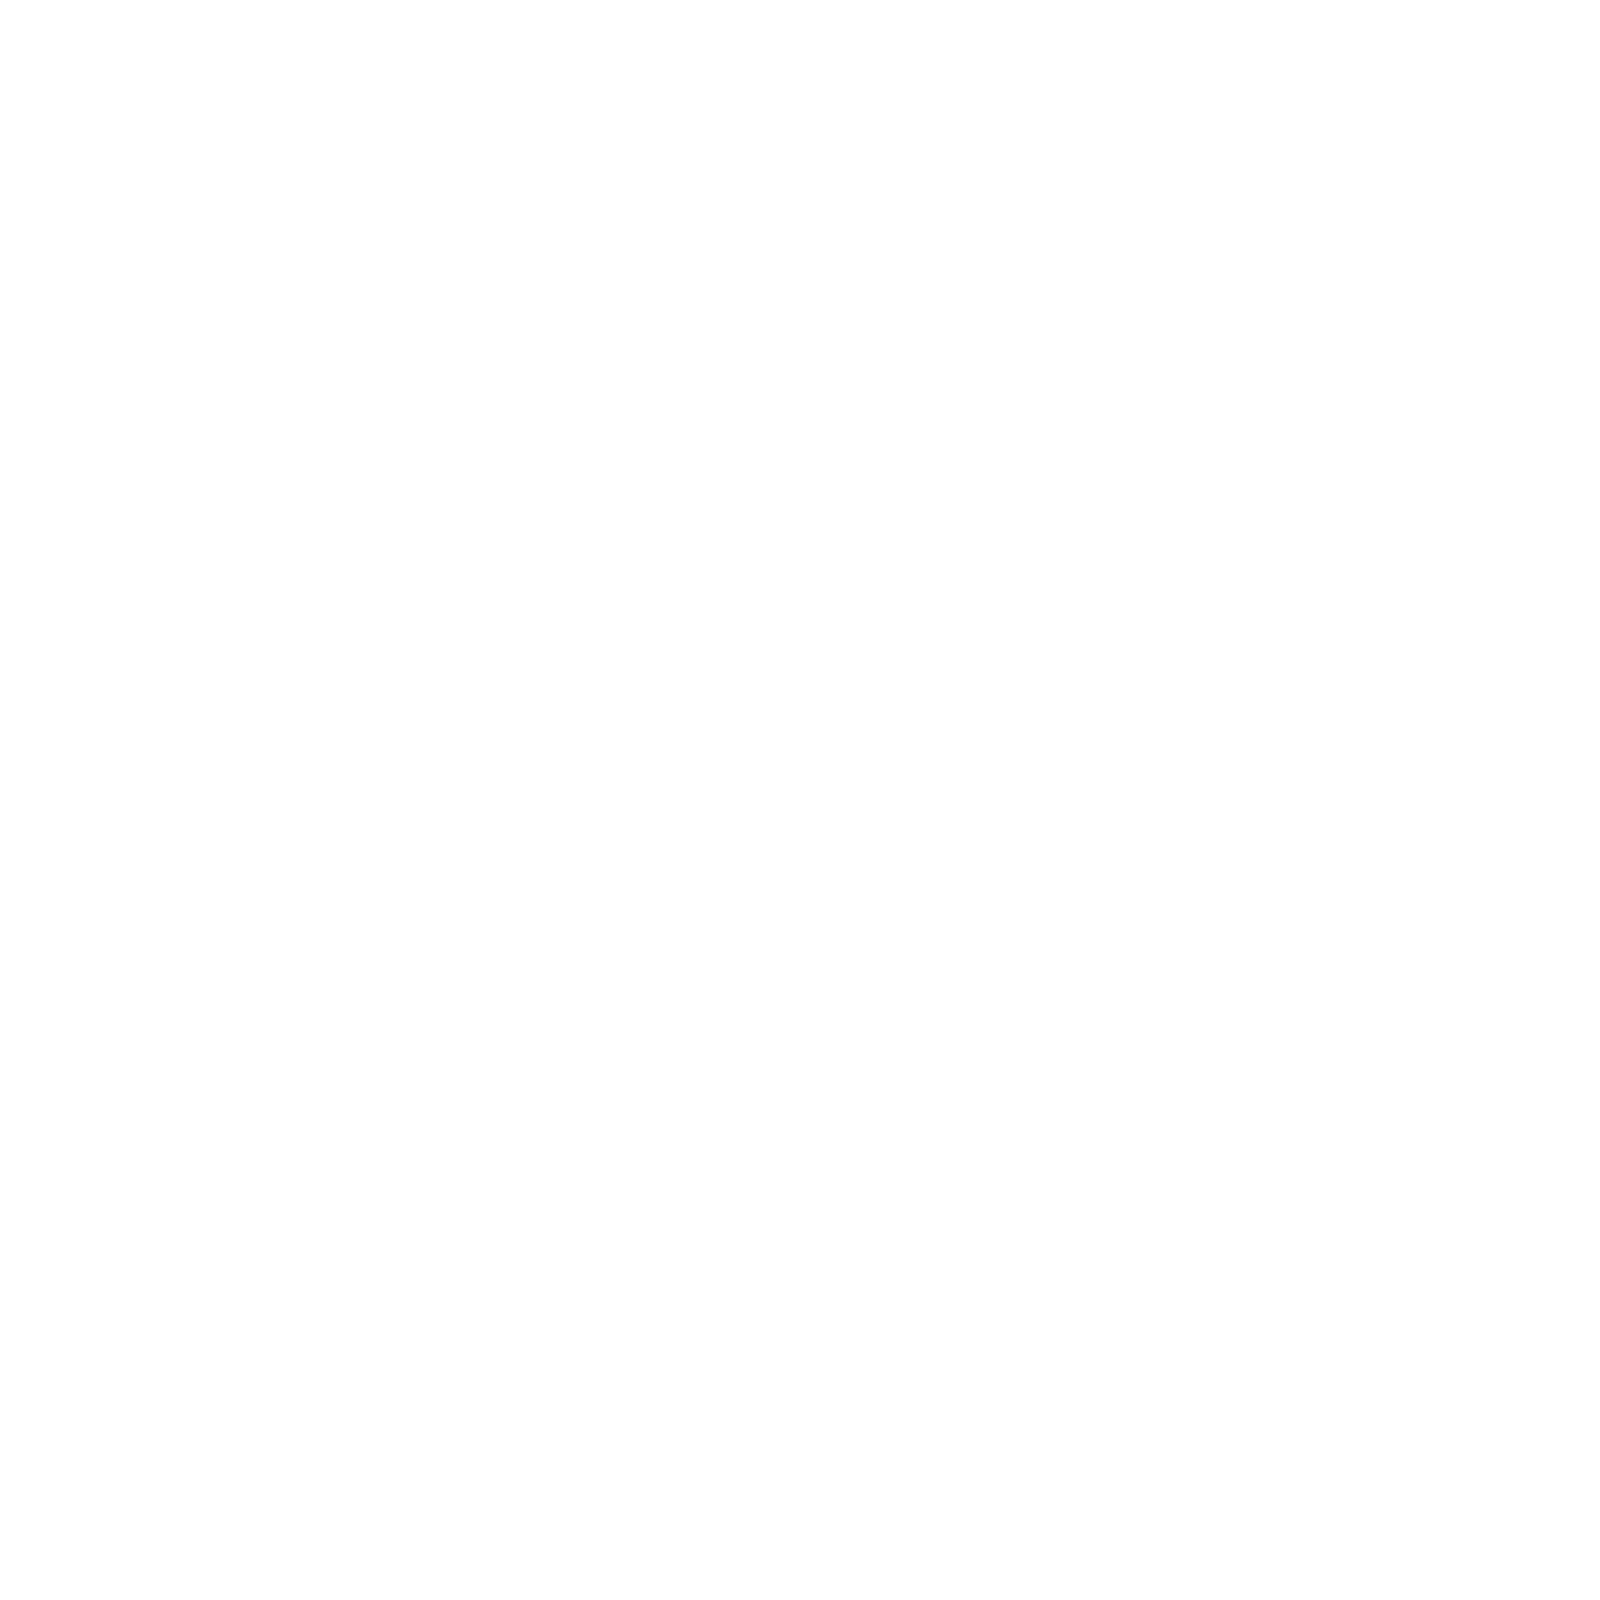 Joseph Project